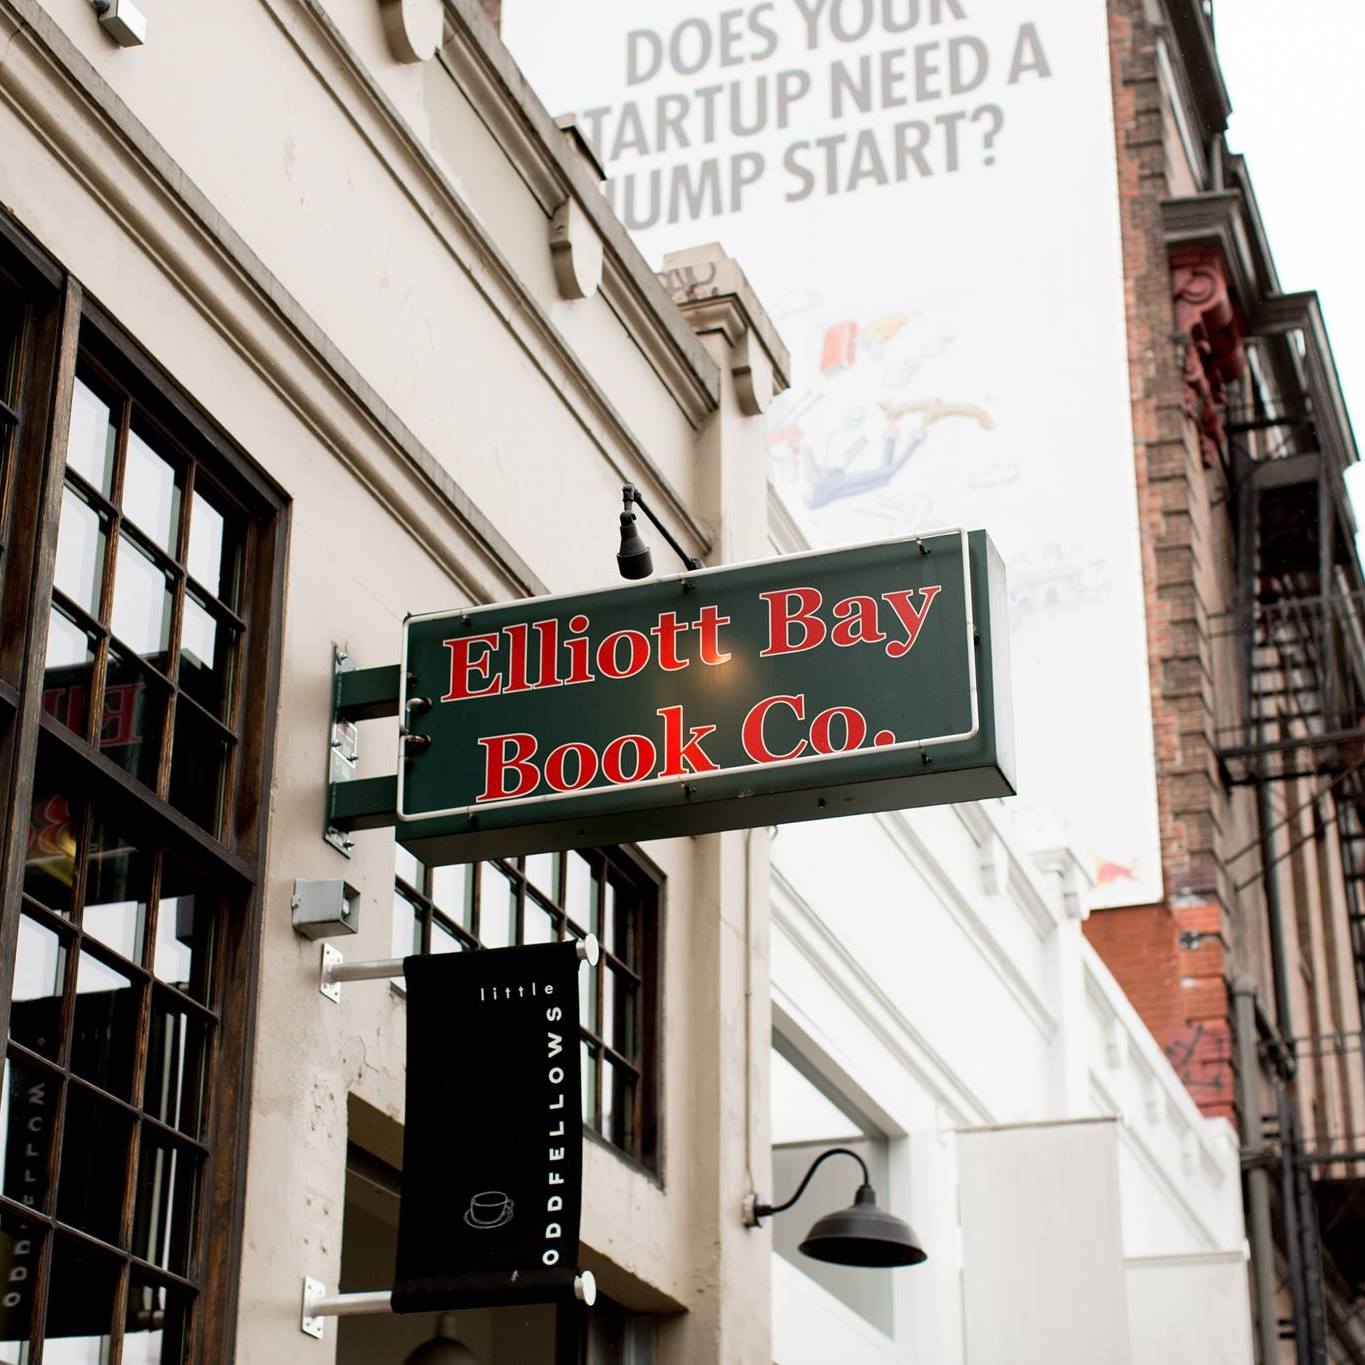 Elliot Bay Book Company's sign